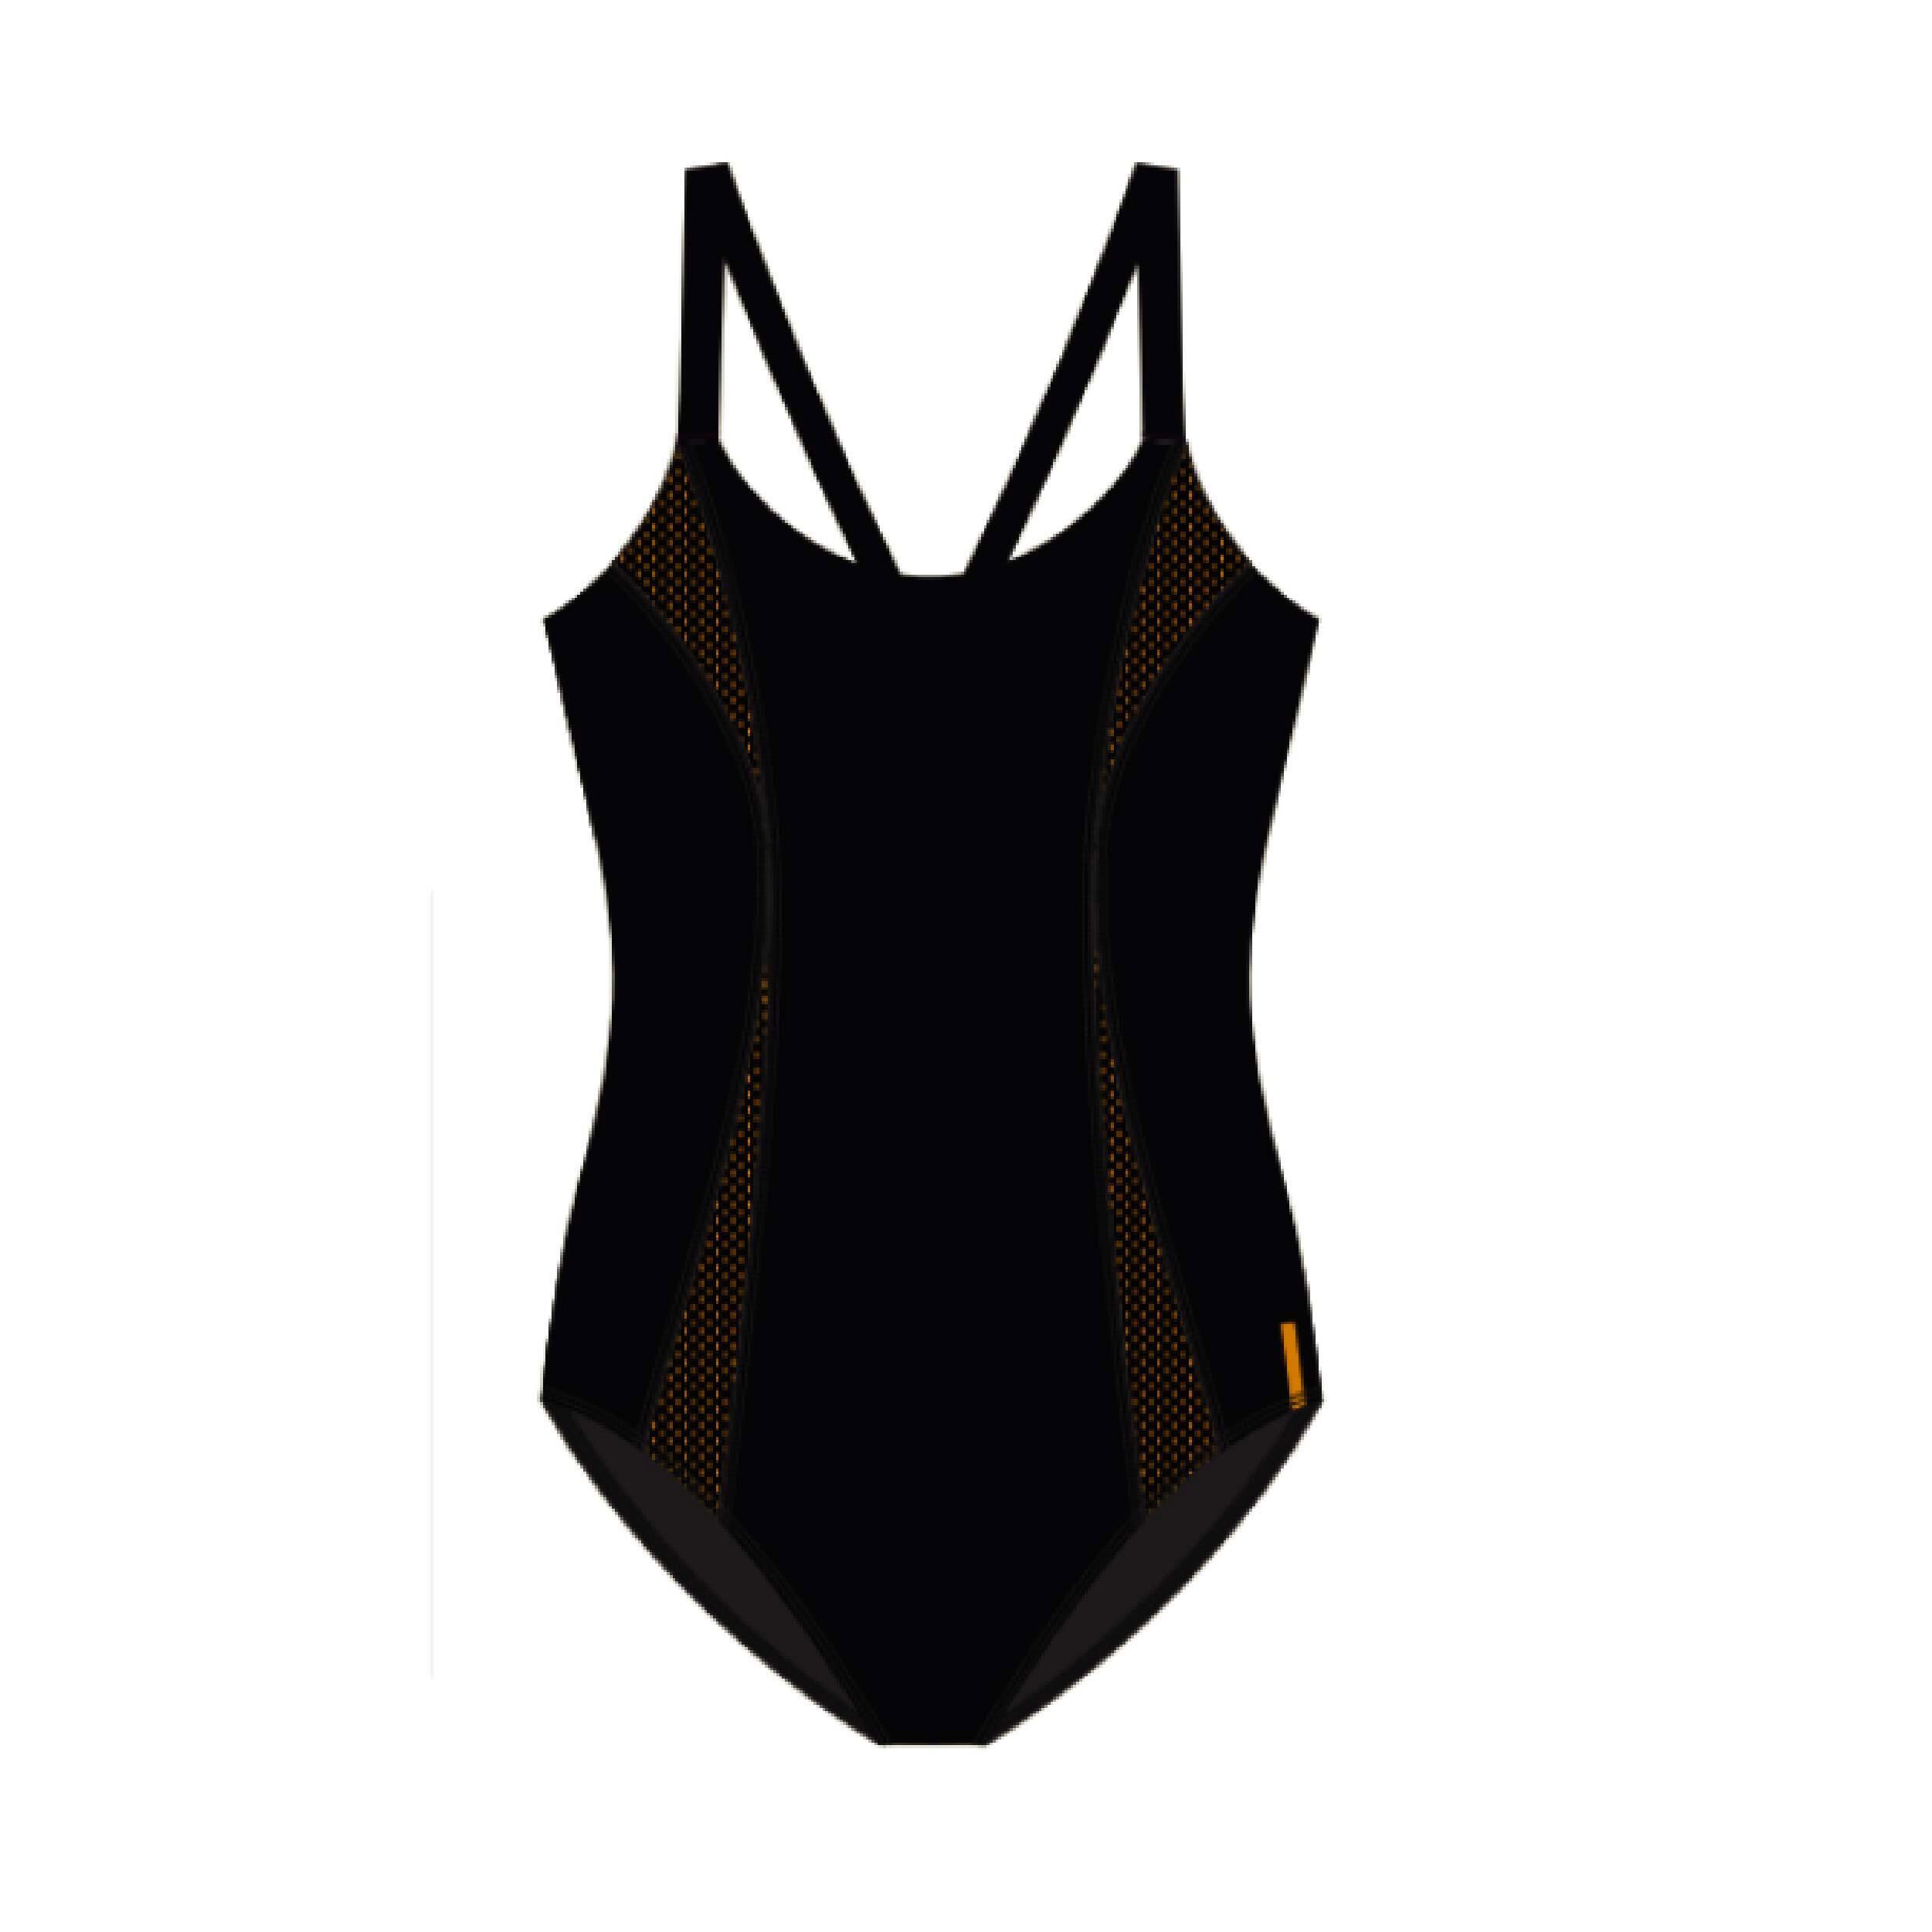 Refurbished Womens Aquafitness One-piece Swimsuit Elea - A Grade 1/7